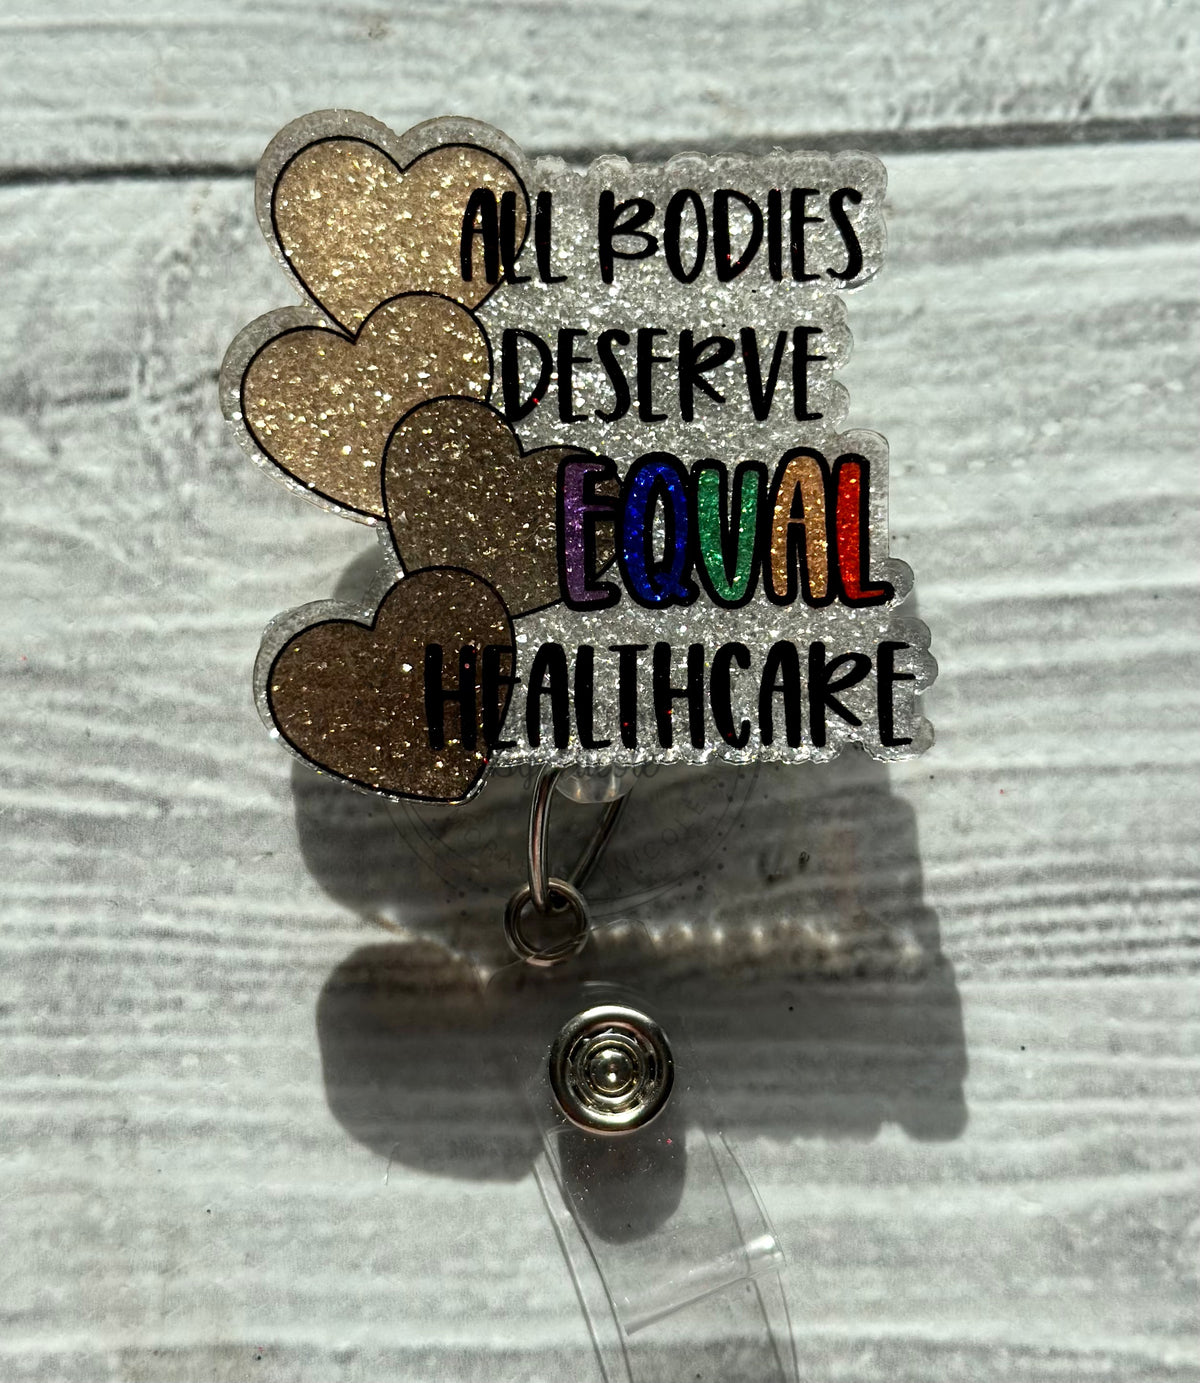 All bodies deserves equal healthcare